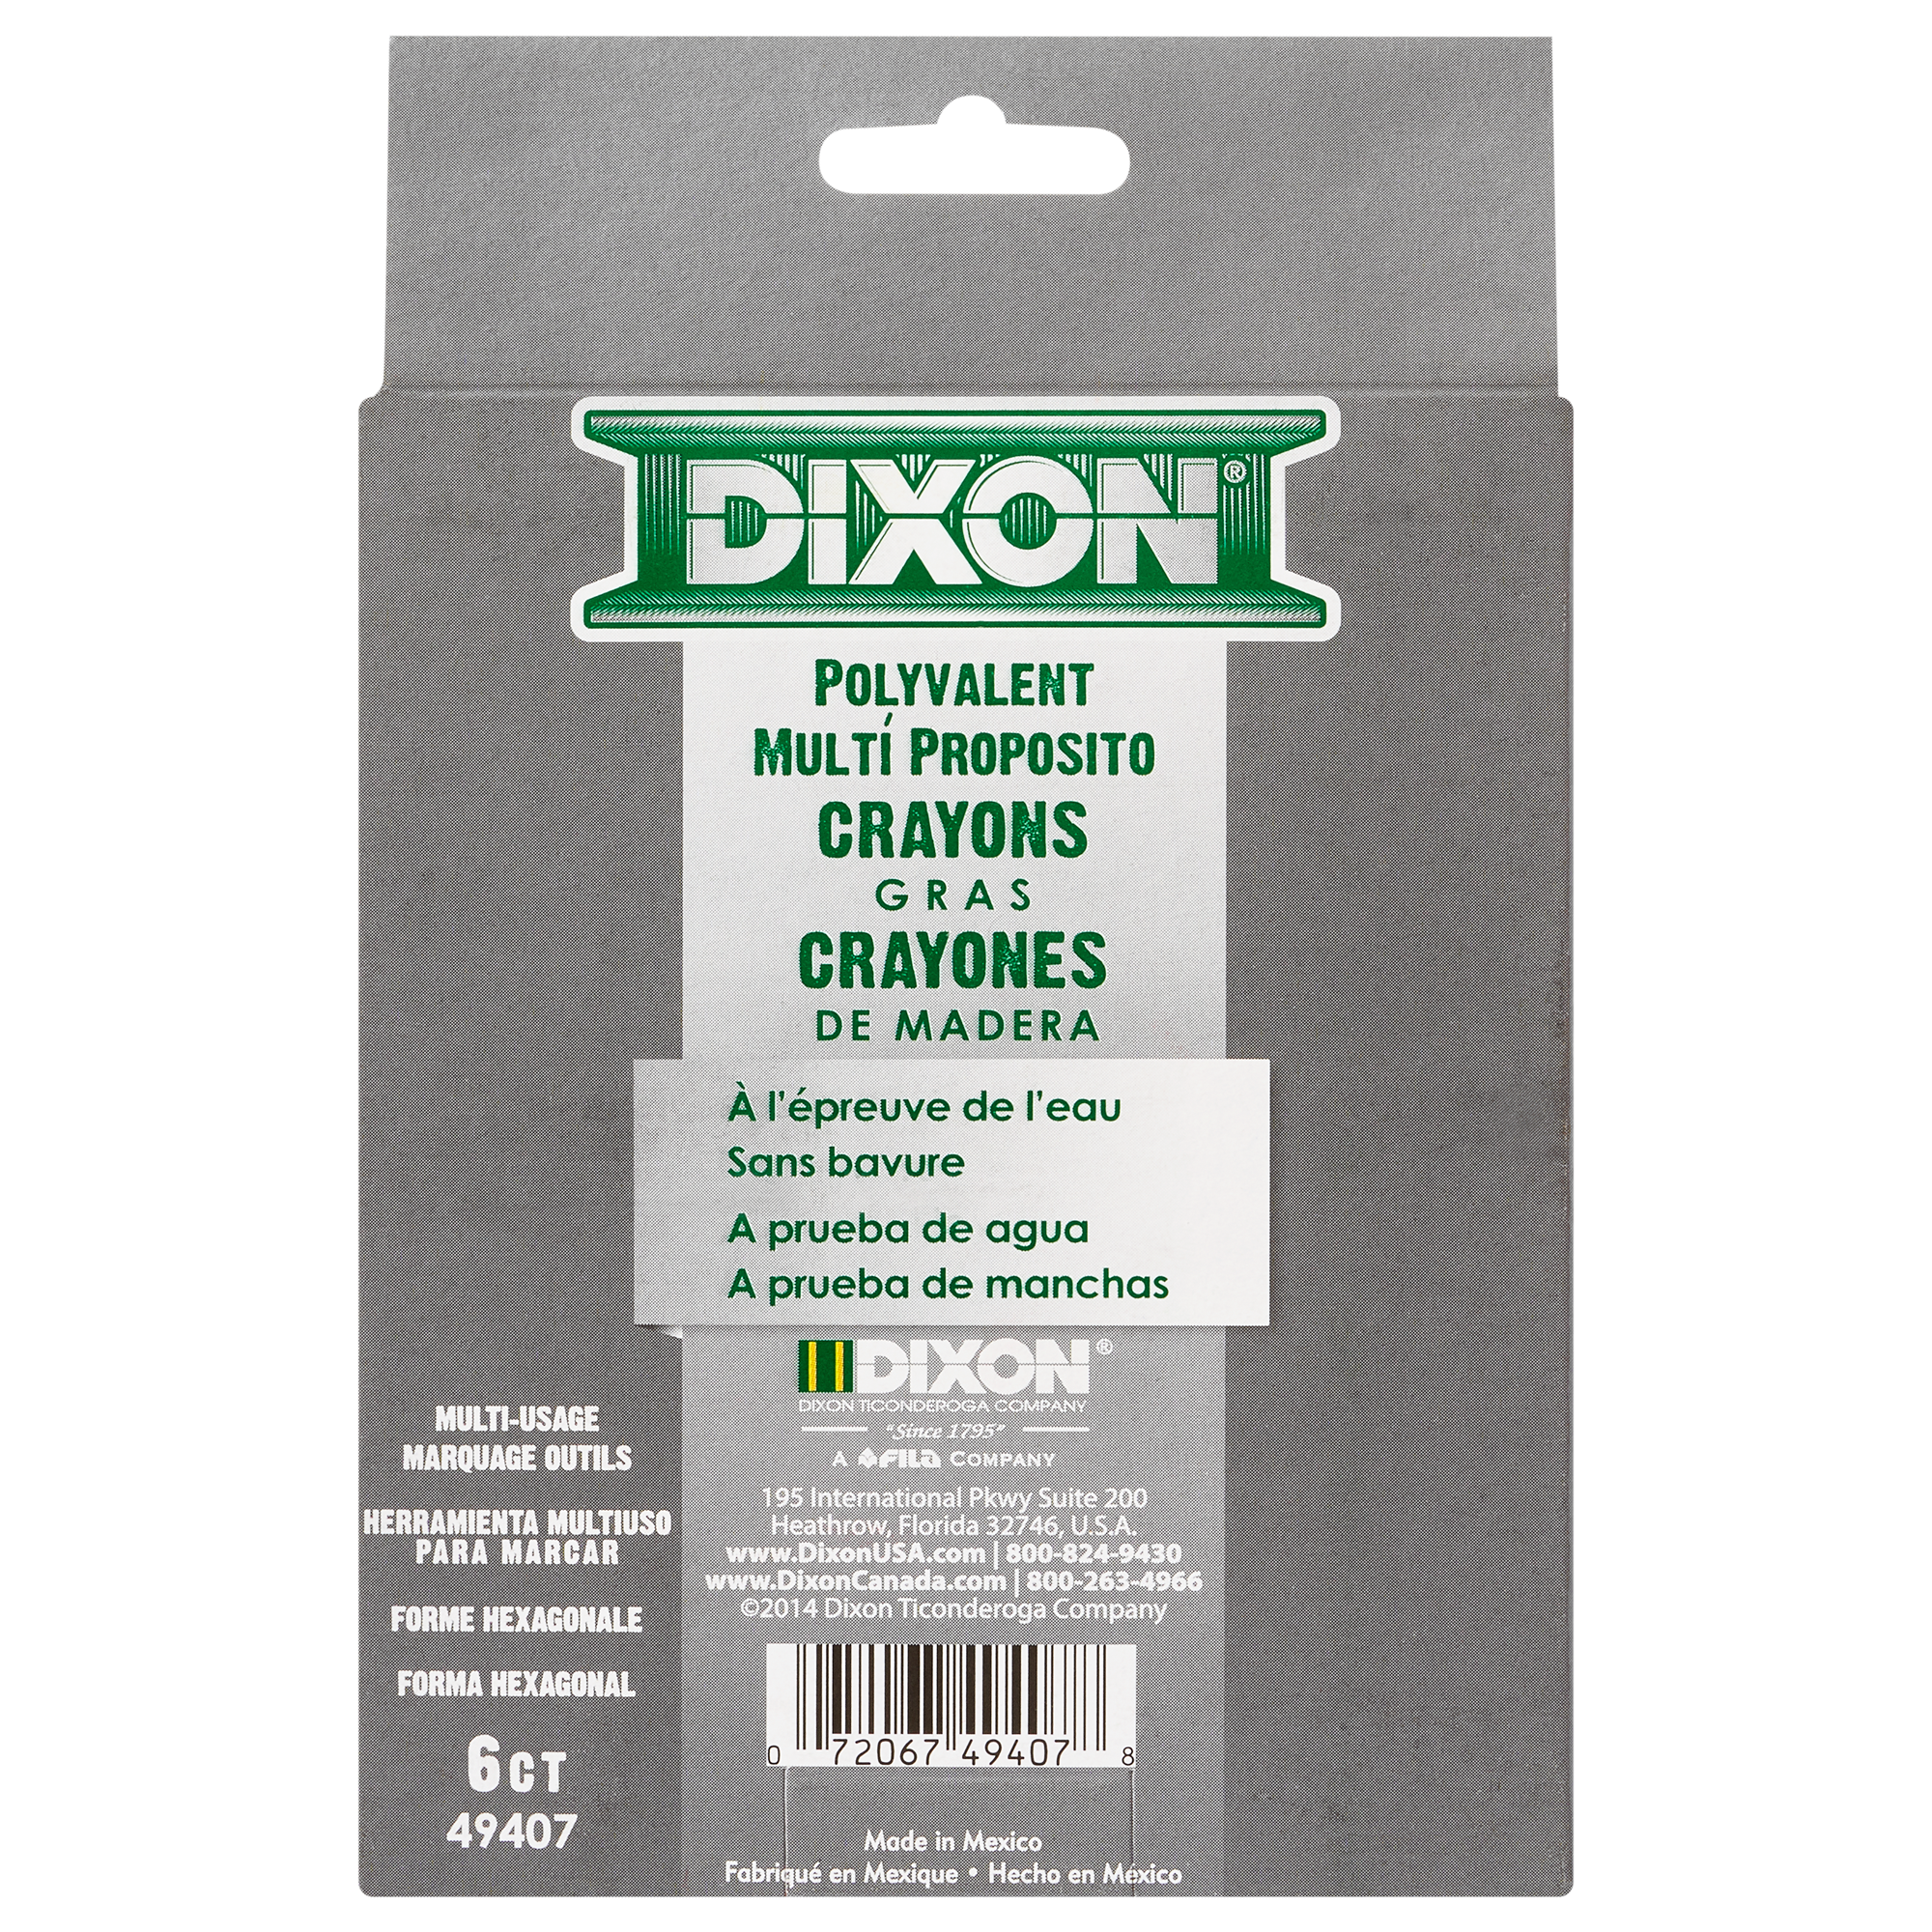 Dixon Ticonderoga 49300 Lumber Crayon, Purple, 1/2 in Dia